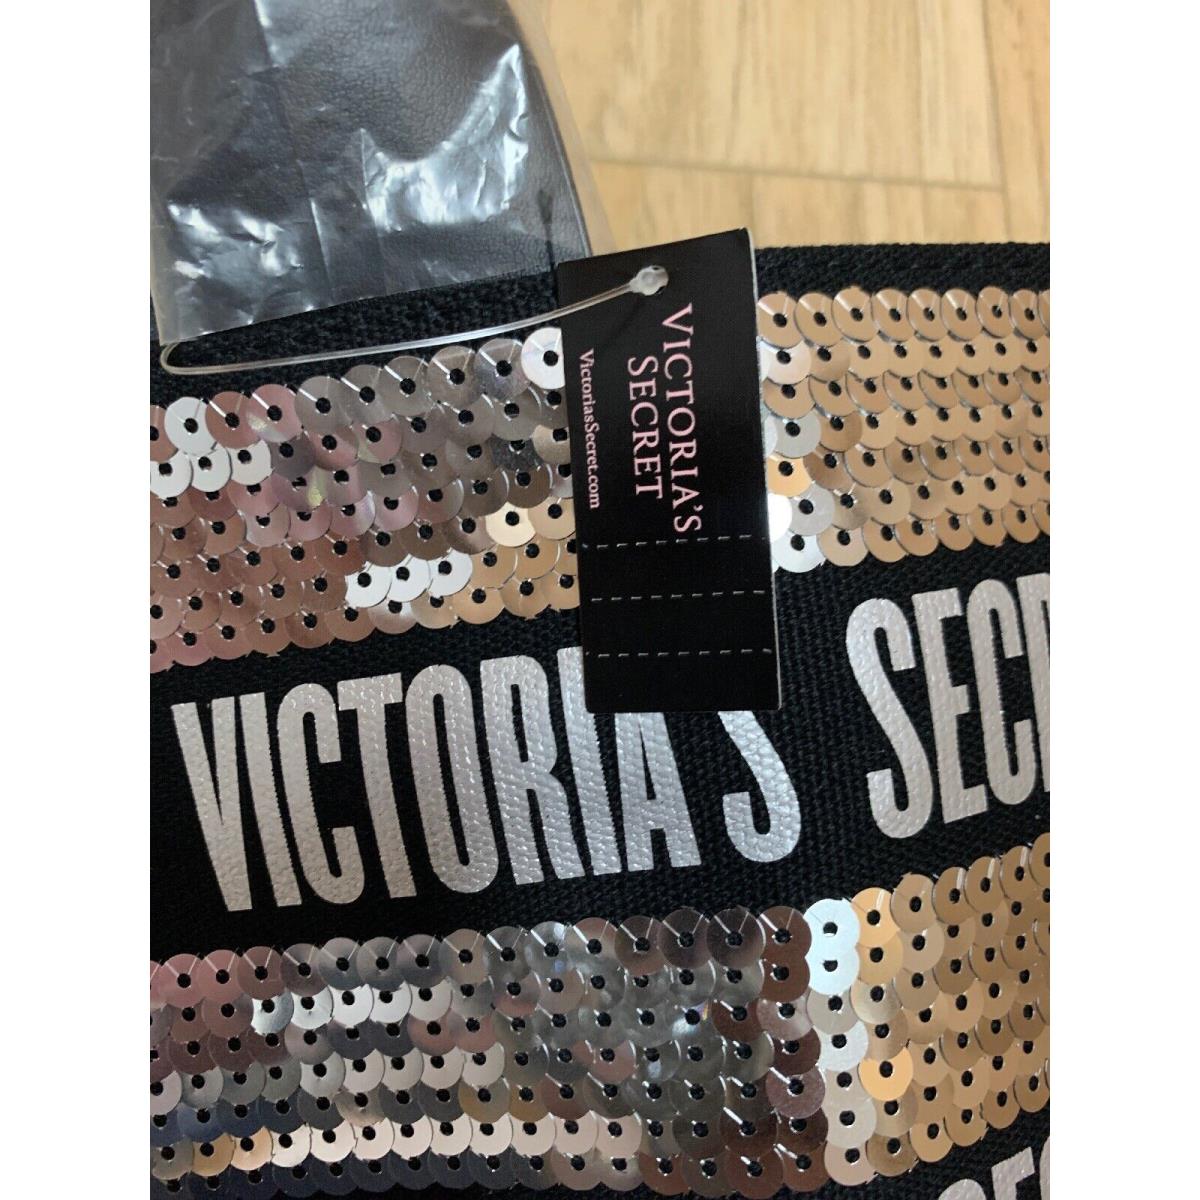 Victoria Secret Black and Silver Sequin Tote Bag Sparkle Bling